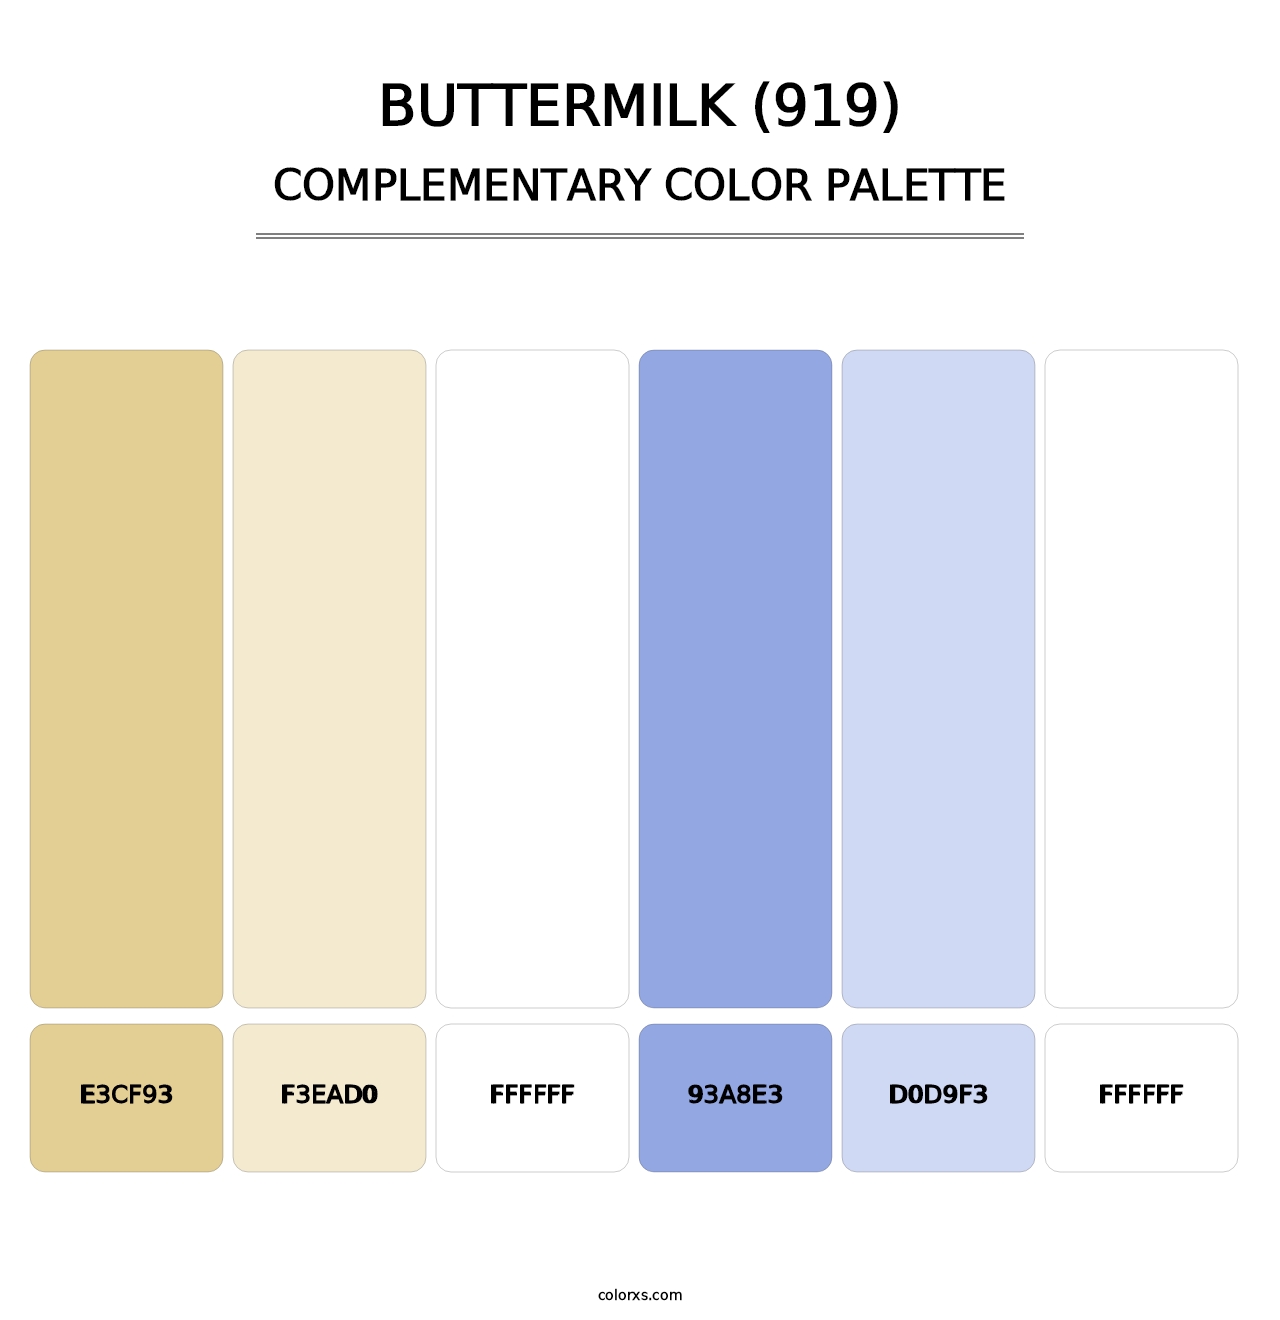 Buttermilk (919) - Complementary Color Palette